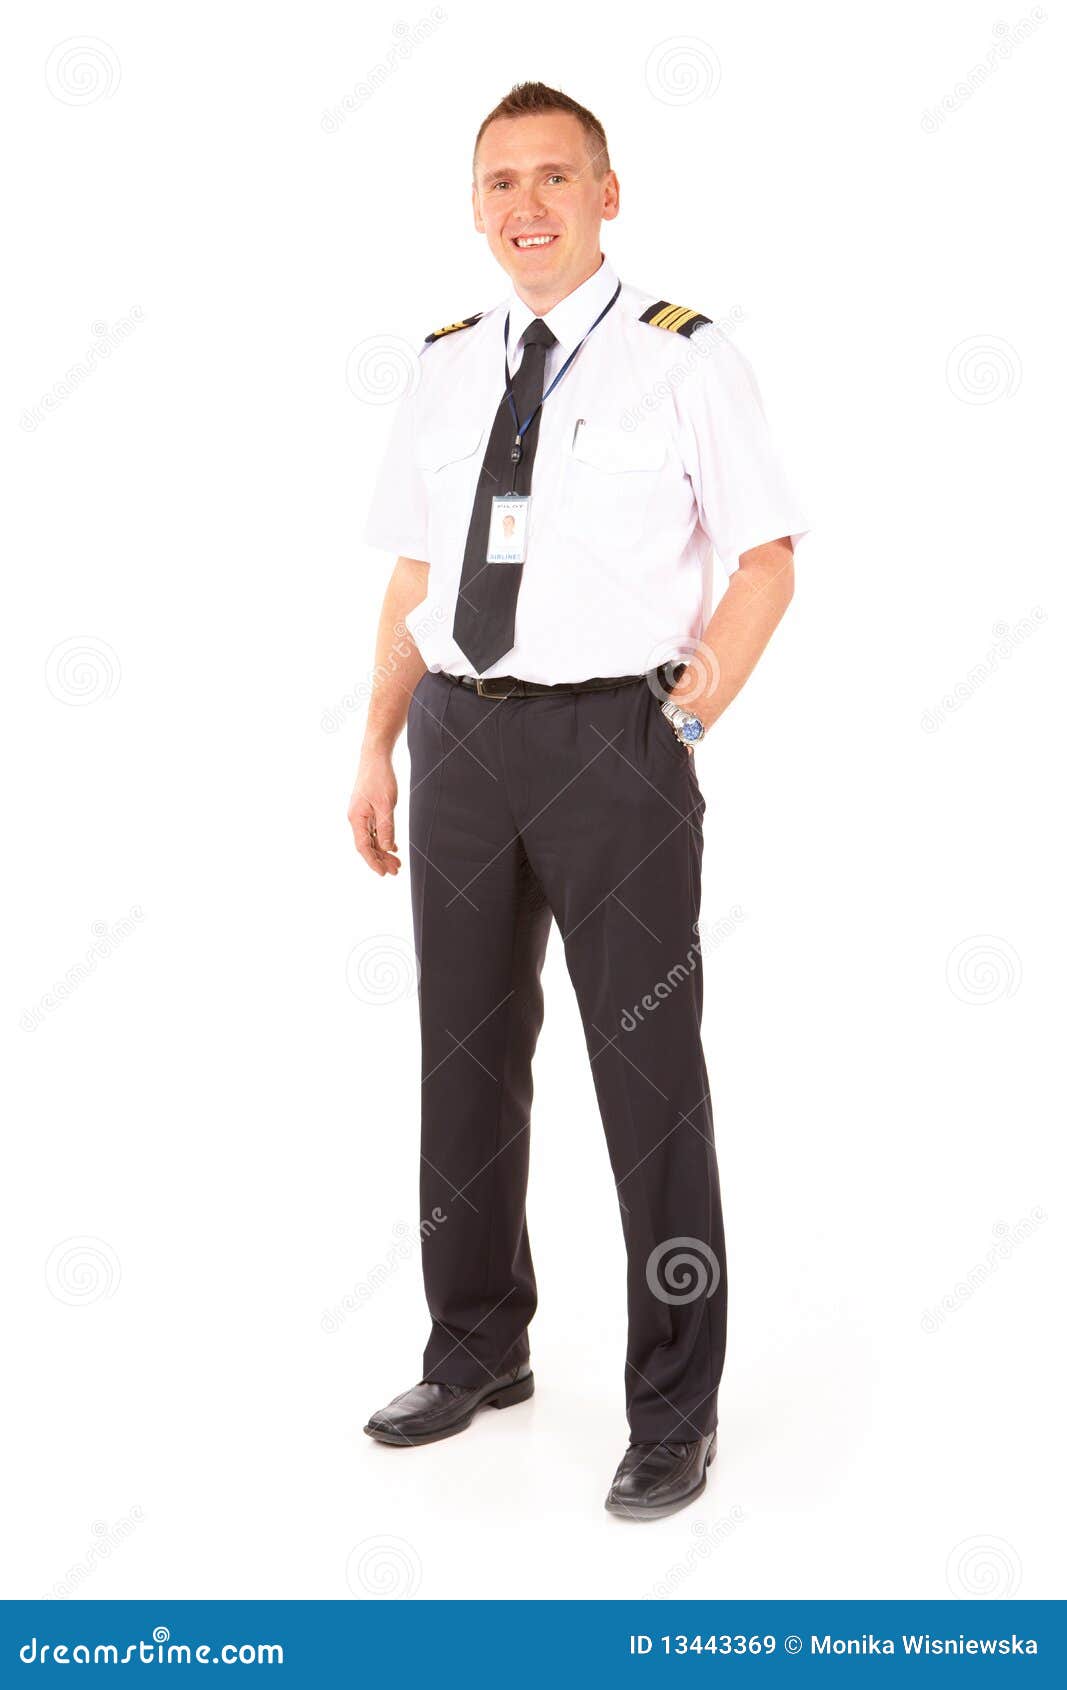 airline pilot